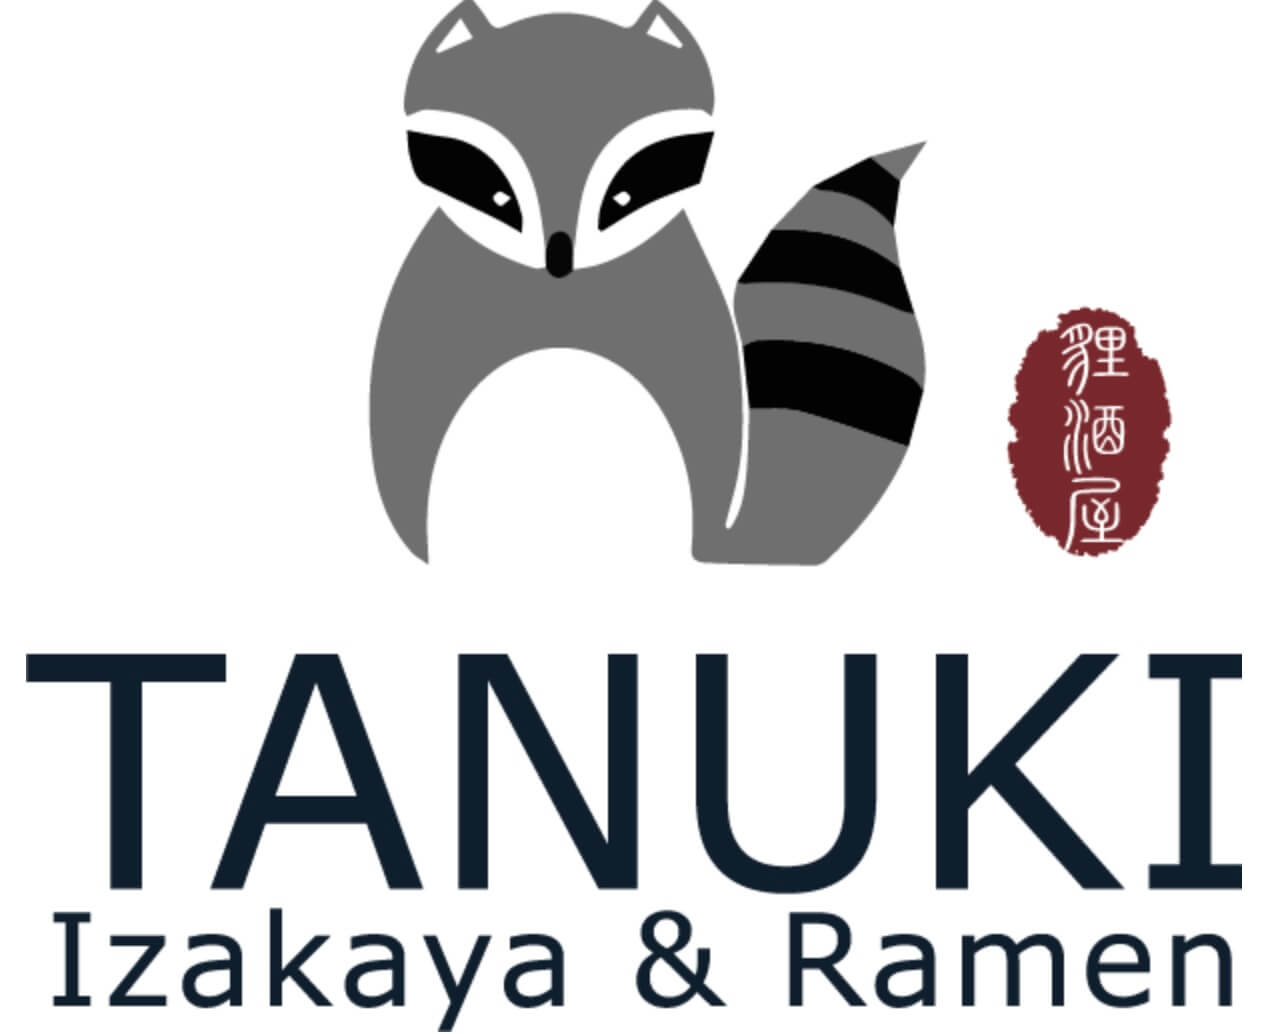 TanukiRamenLogo - Tanuki Izakaya & Ramen